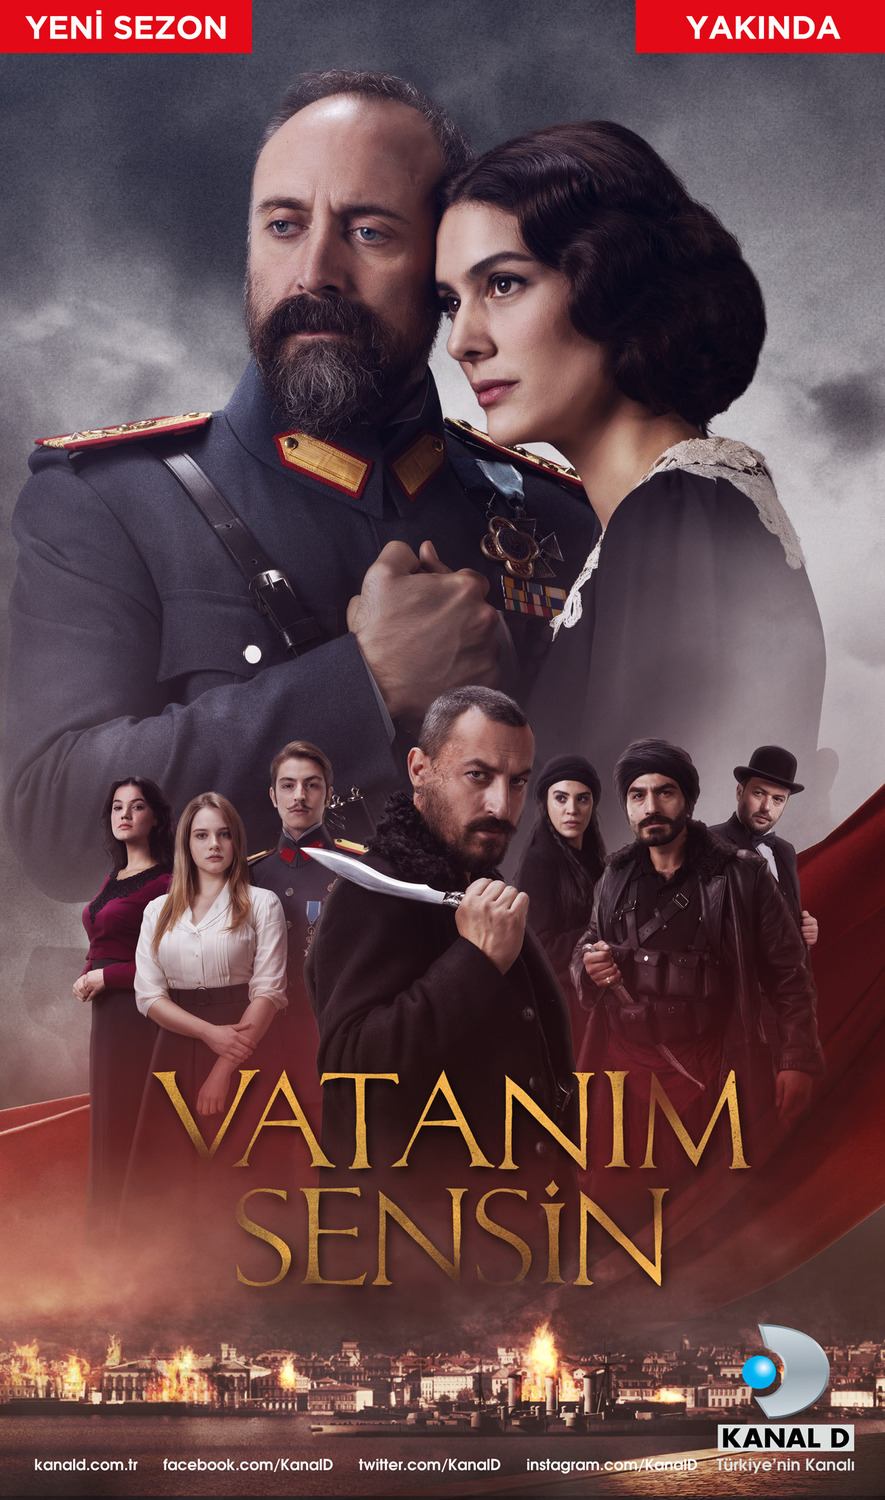 Extra Large TV Poster Image for Vatanim Sensin (#3 of 3)